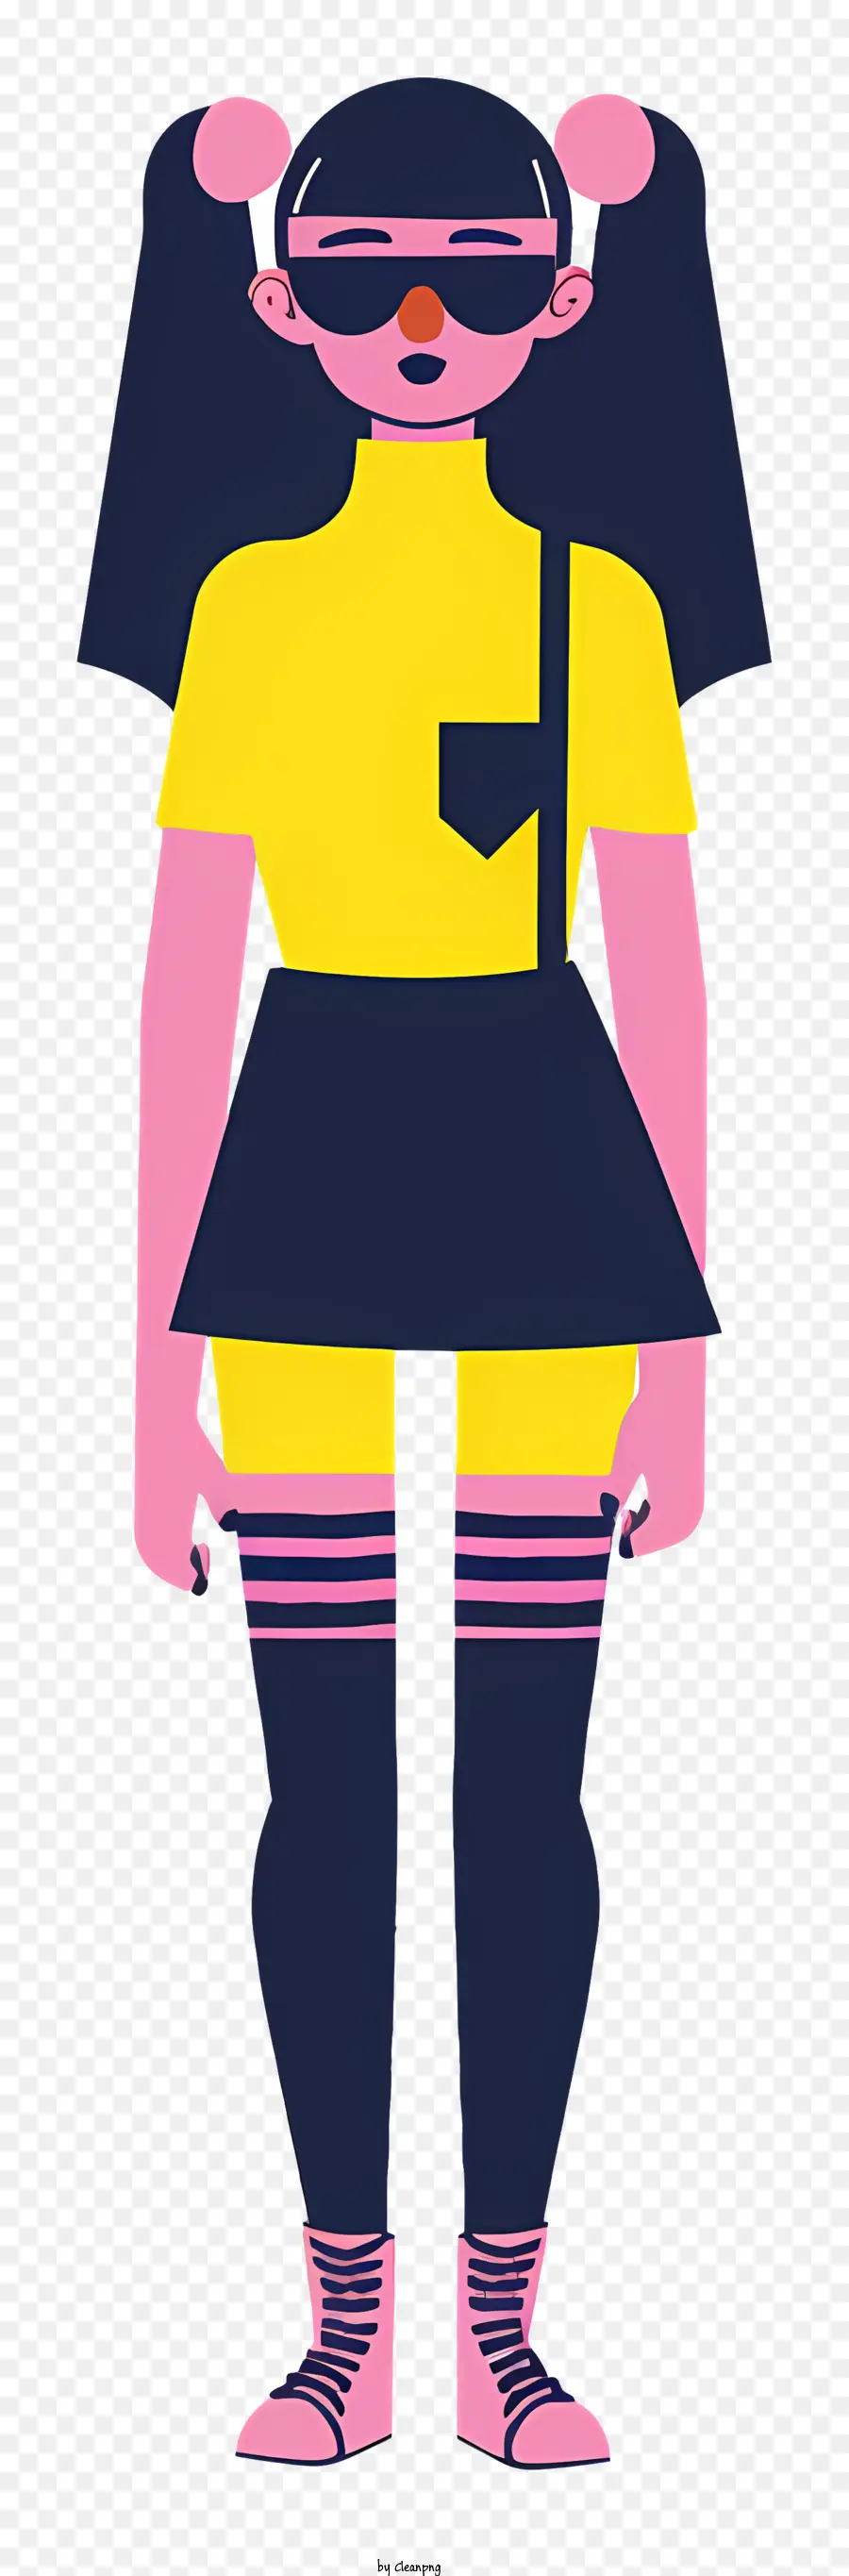 Fashion Girl Cartoon Character Giallo e rosa Outfit Long Hair Concentration - Personaggio dei cartoni animati in outfit giallo e rosa